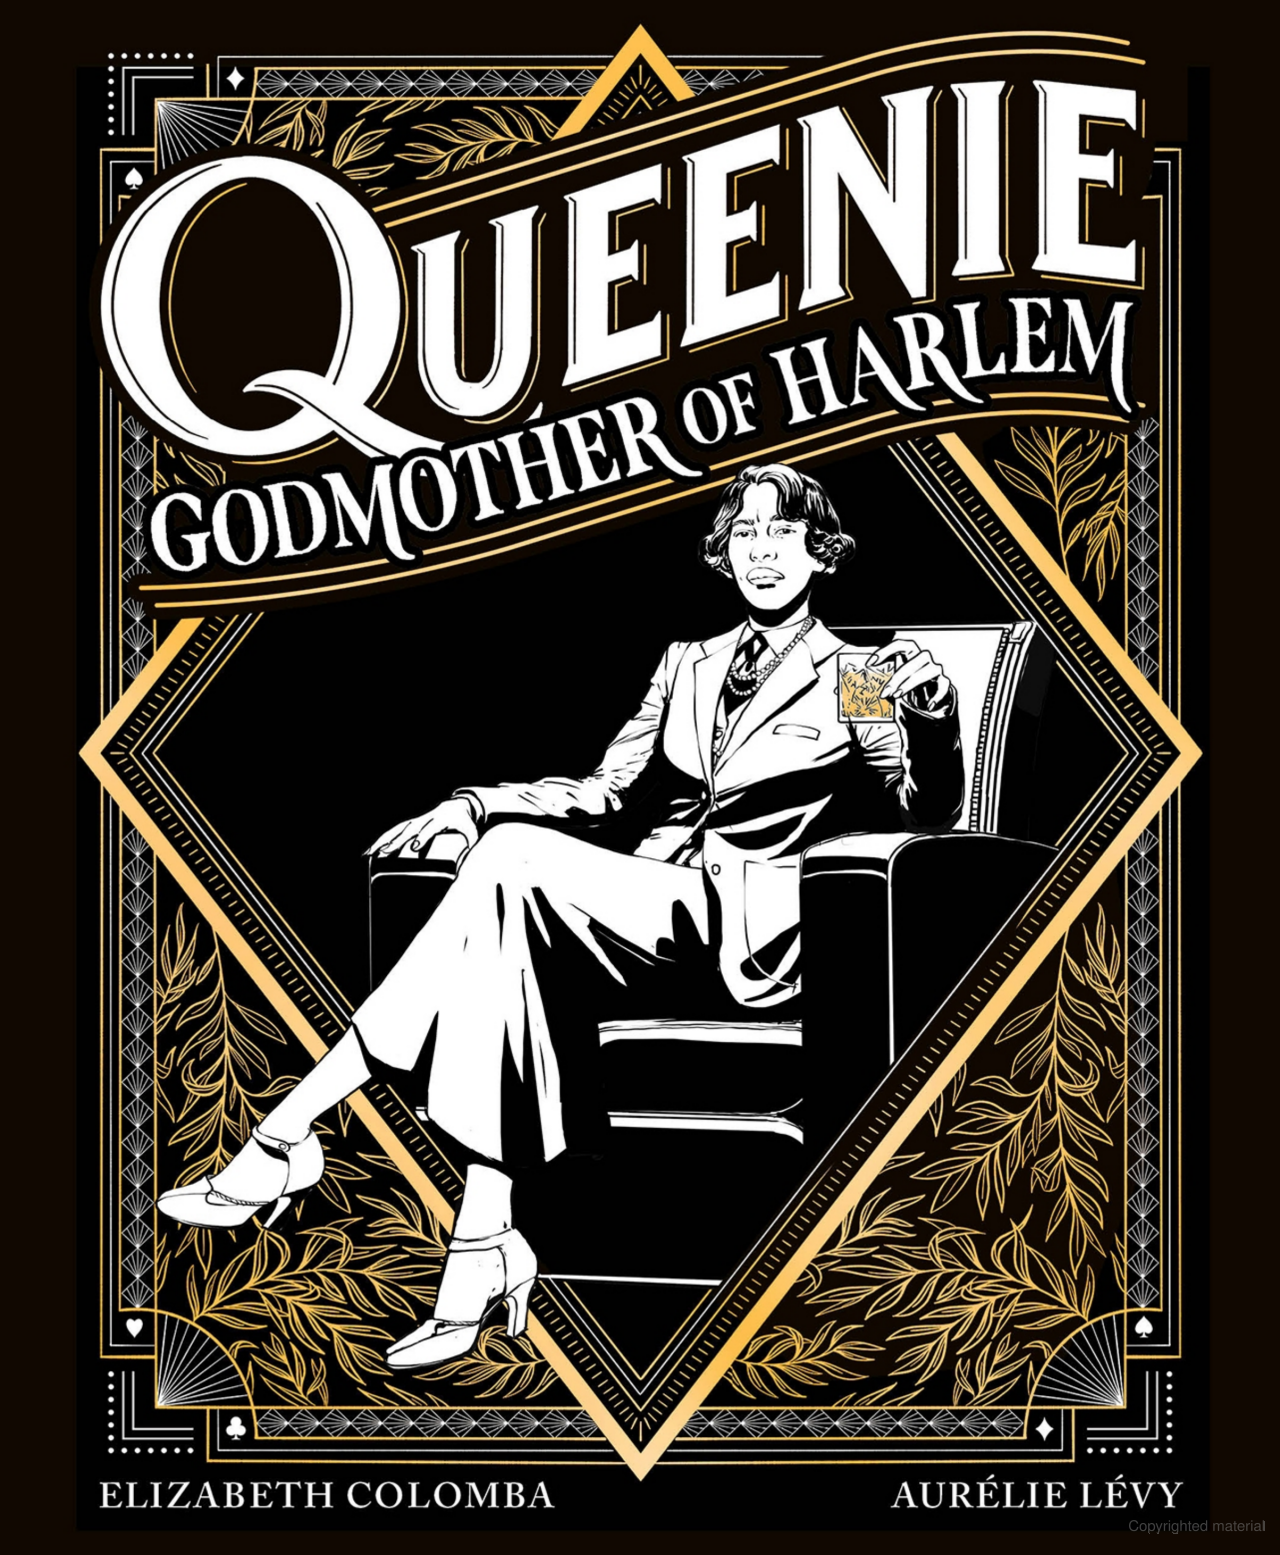 Queenie, Godmother of Harlem